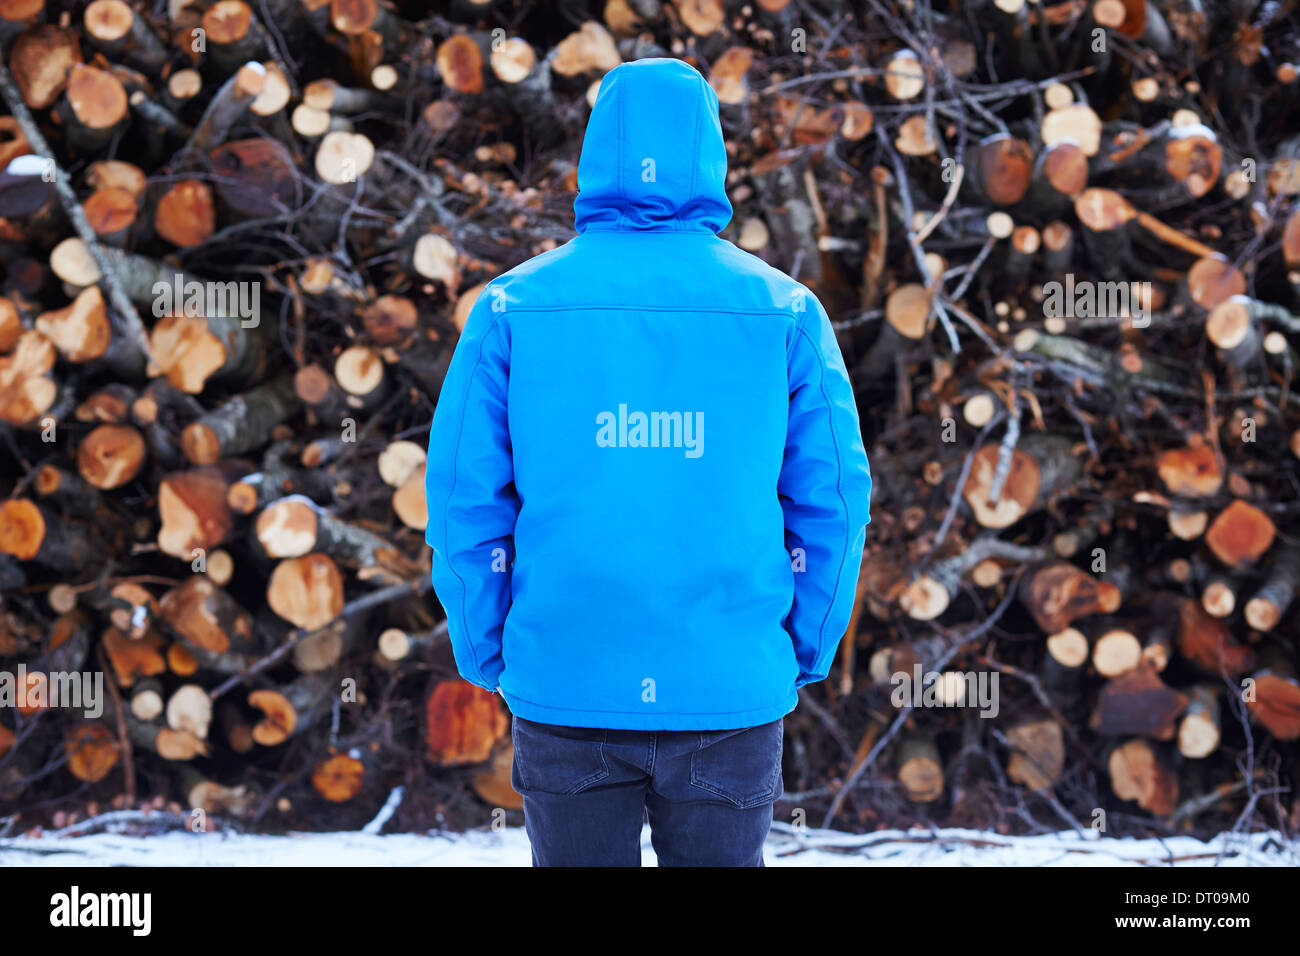 Young man on blue jacket staring at log stack Stock Photo